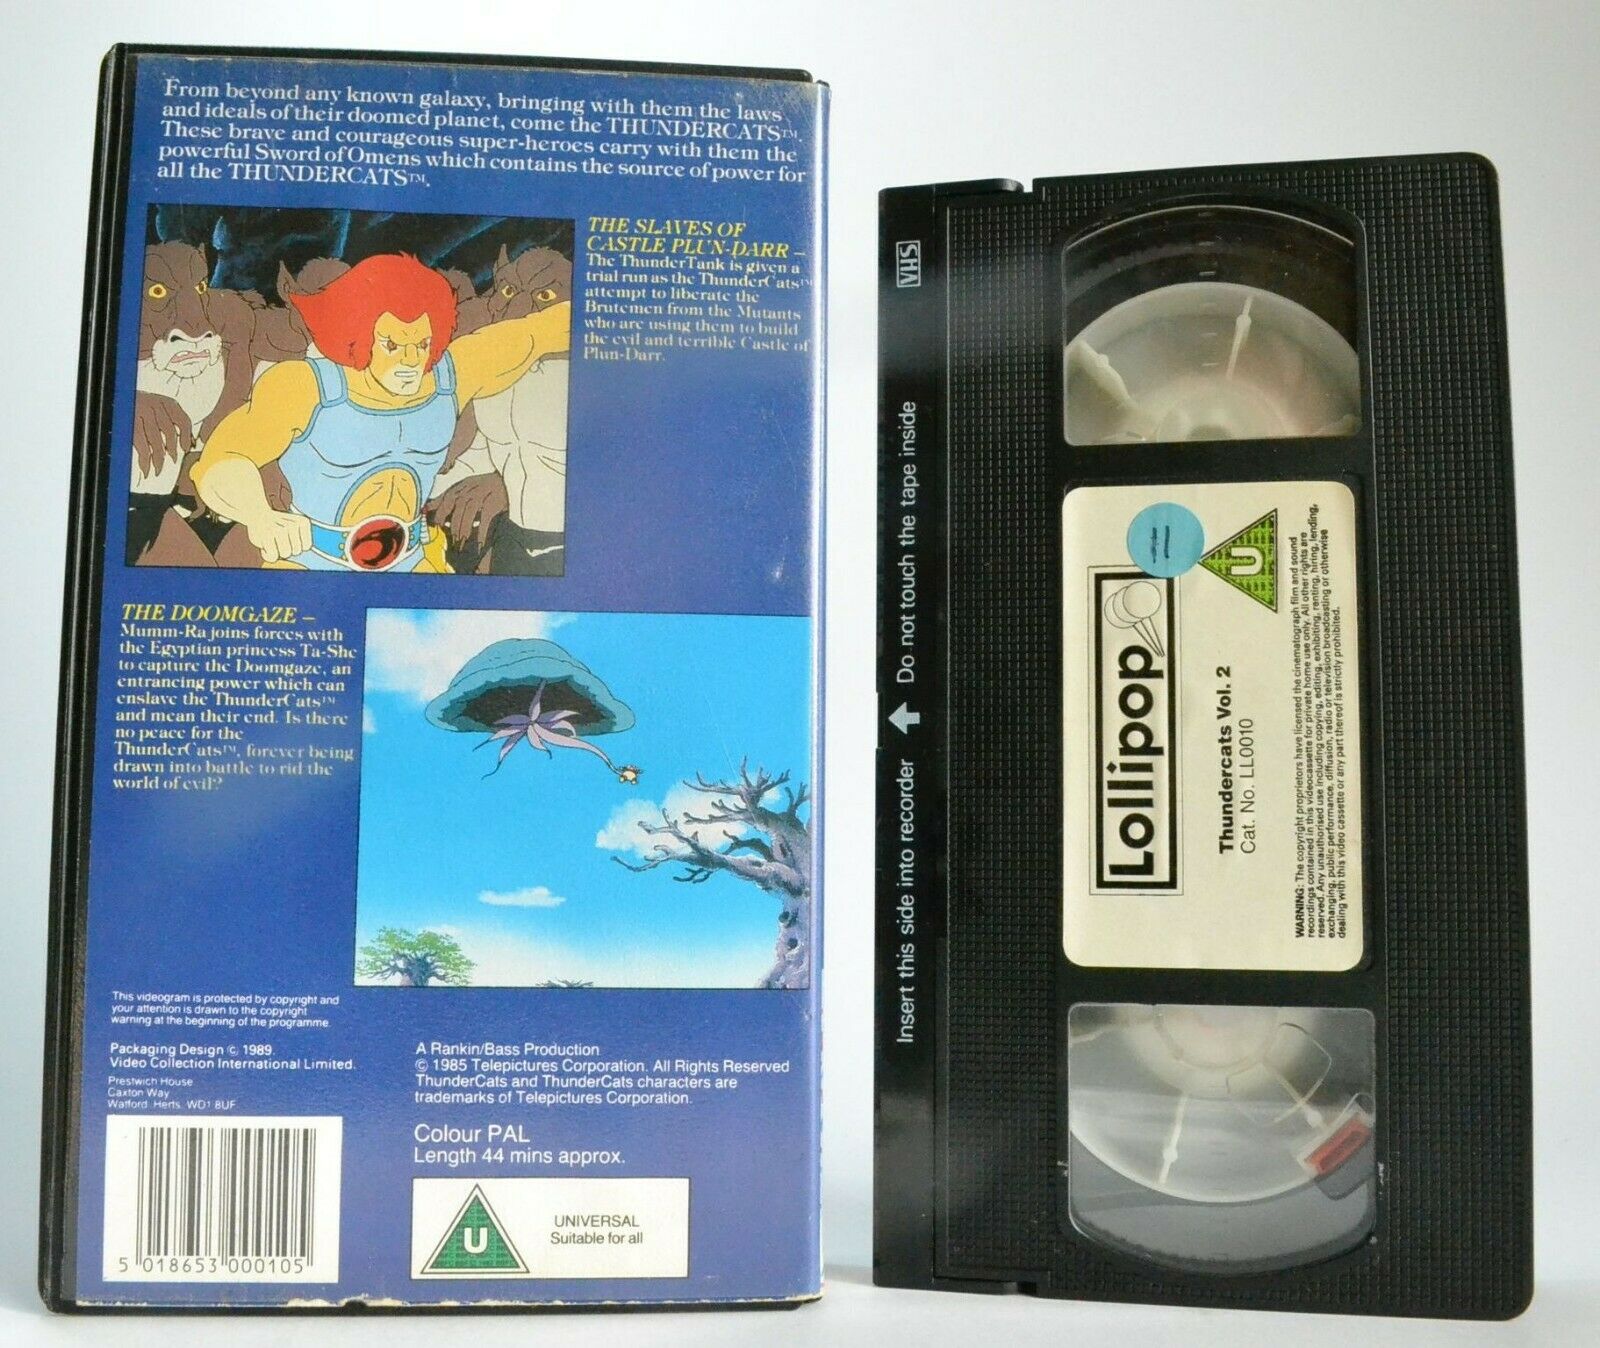 Thundercats: Slaves Of Castle Plun-Darr - Animated Adventures - Children's - VHS-